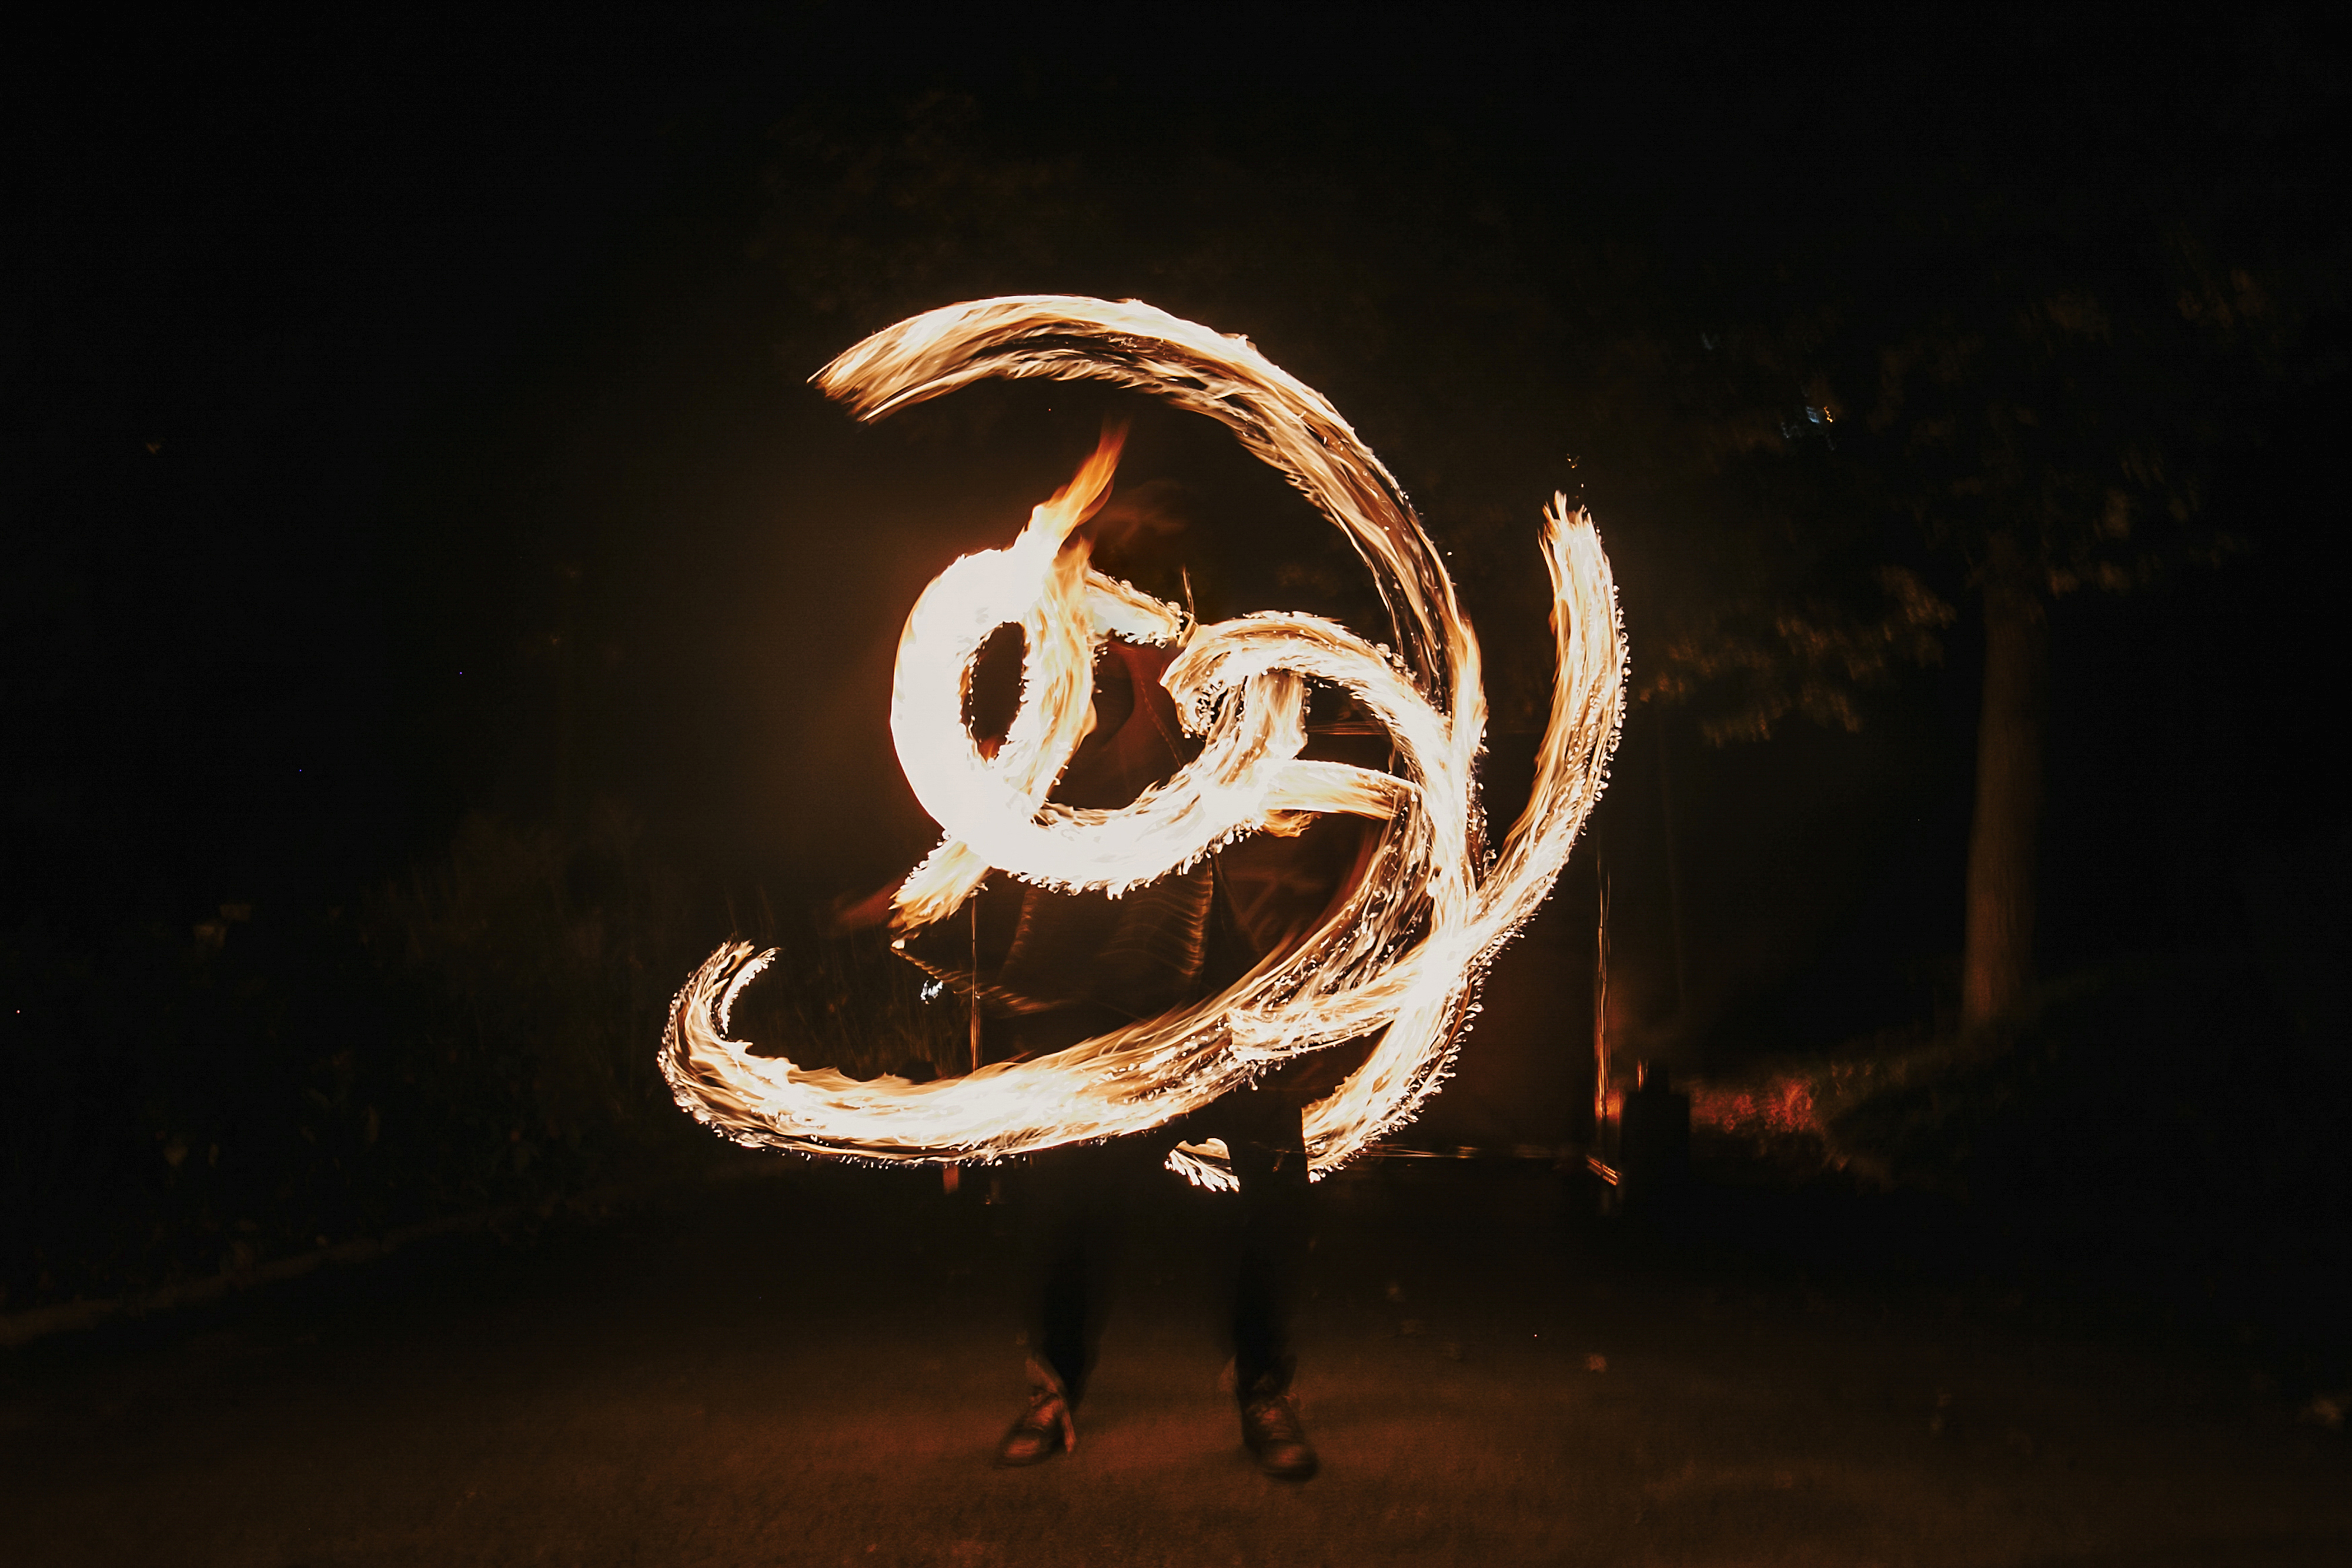 fire-dancers-swing-spinning-fire-and-man-juggling-2021-08-29-01-48-32-utc.JPG